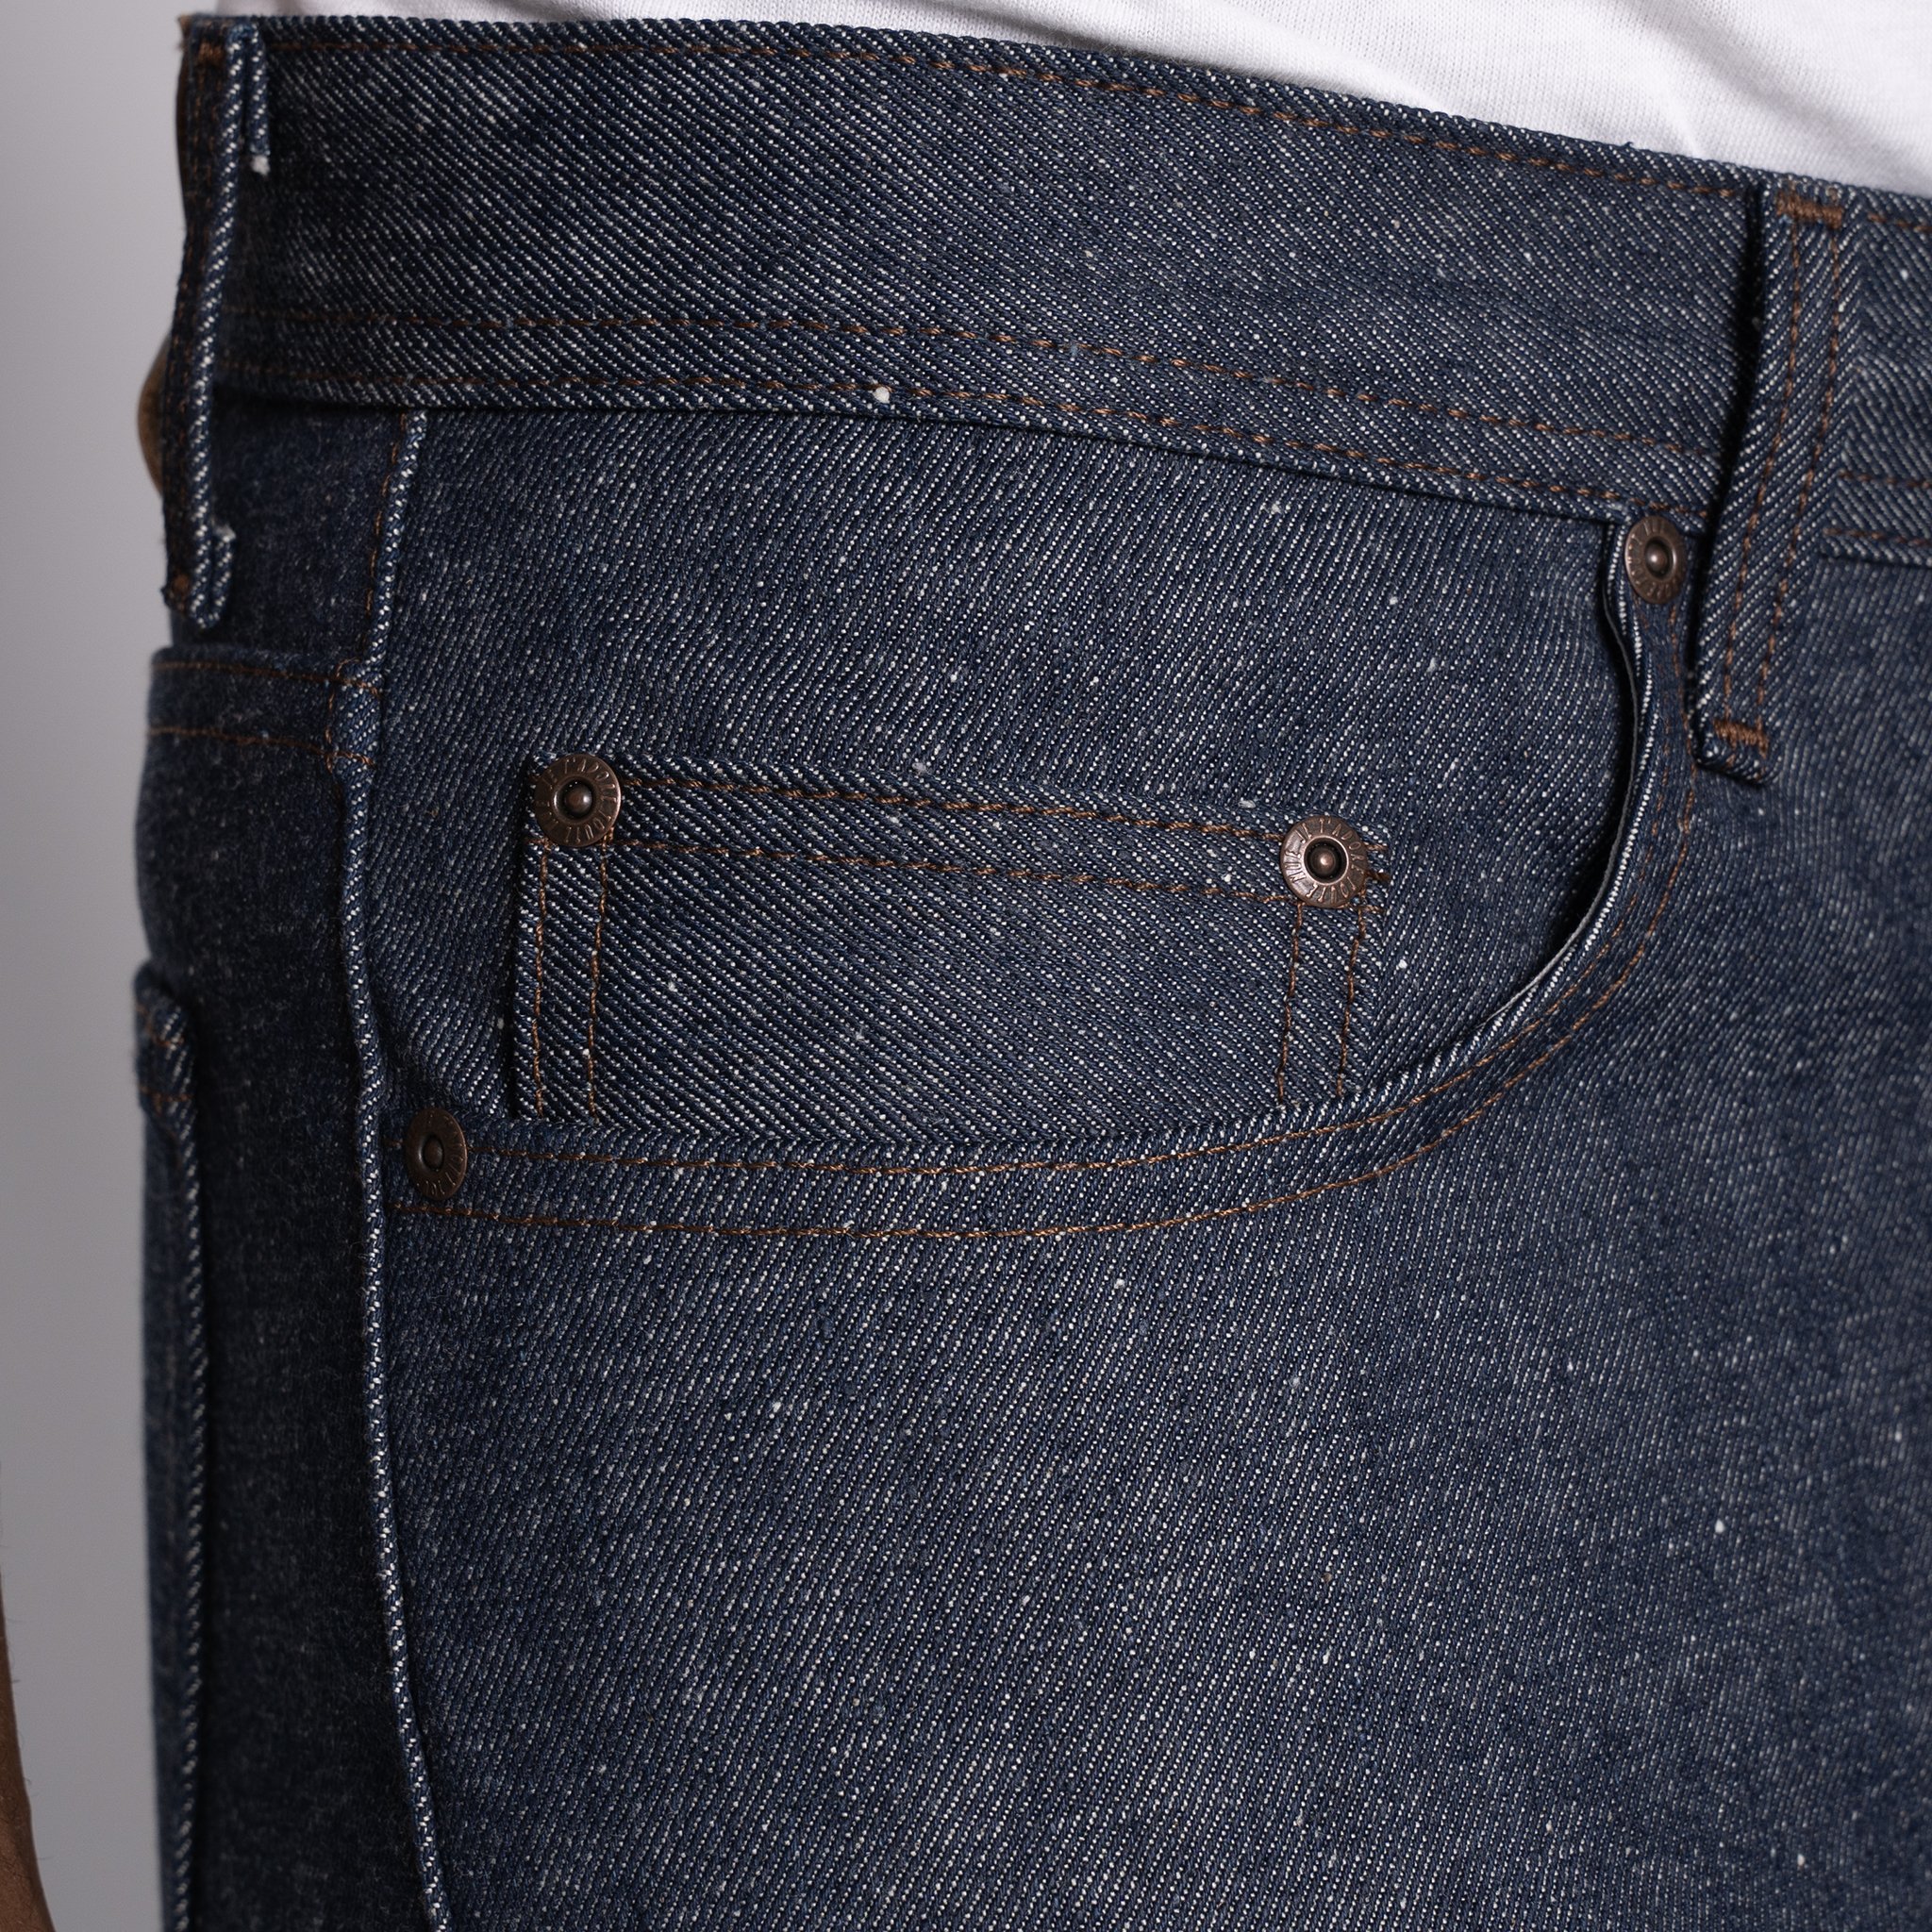  Greencast Slub Selvedge - Jeans 